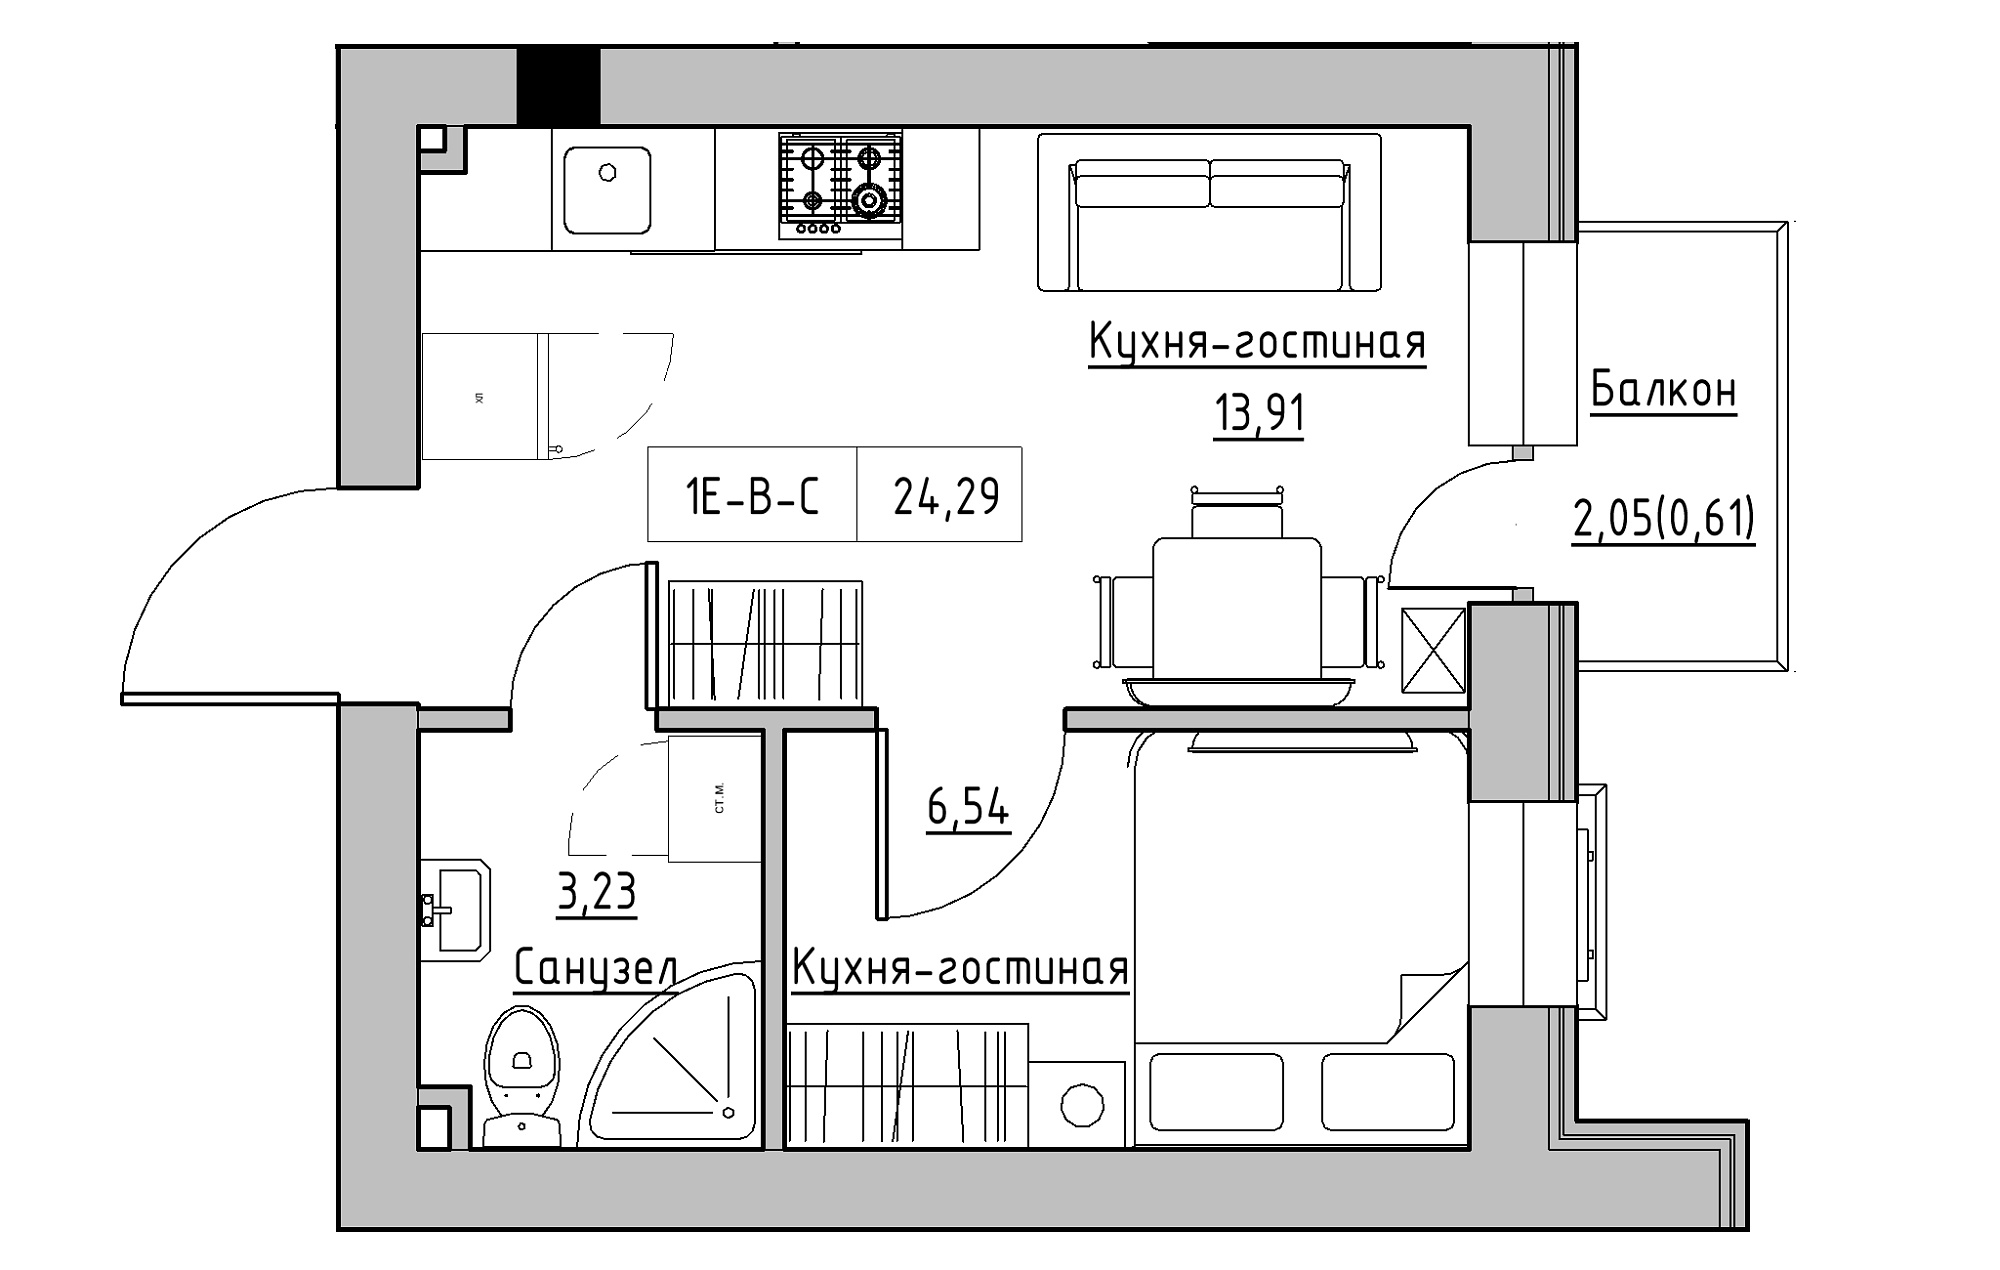 Planning 1-rm flats area 24.29m2, KS-018-03/0009.